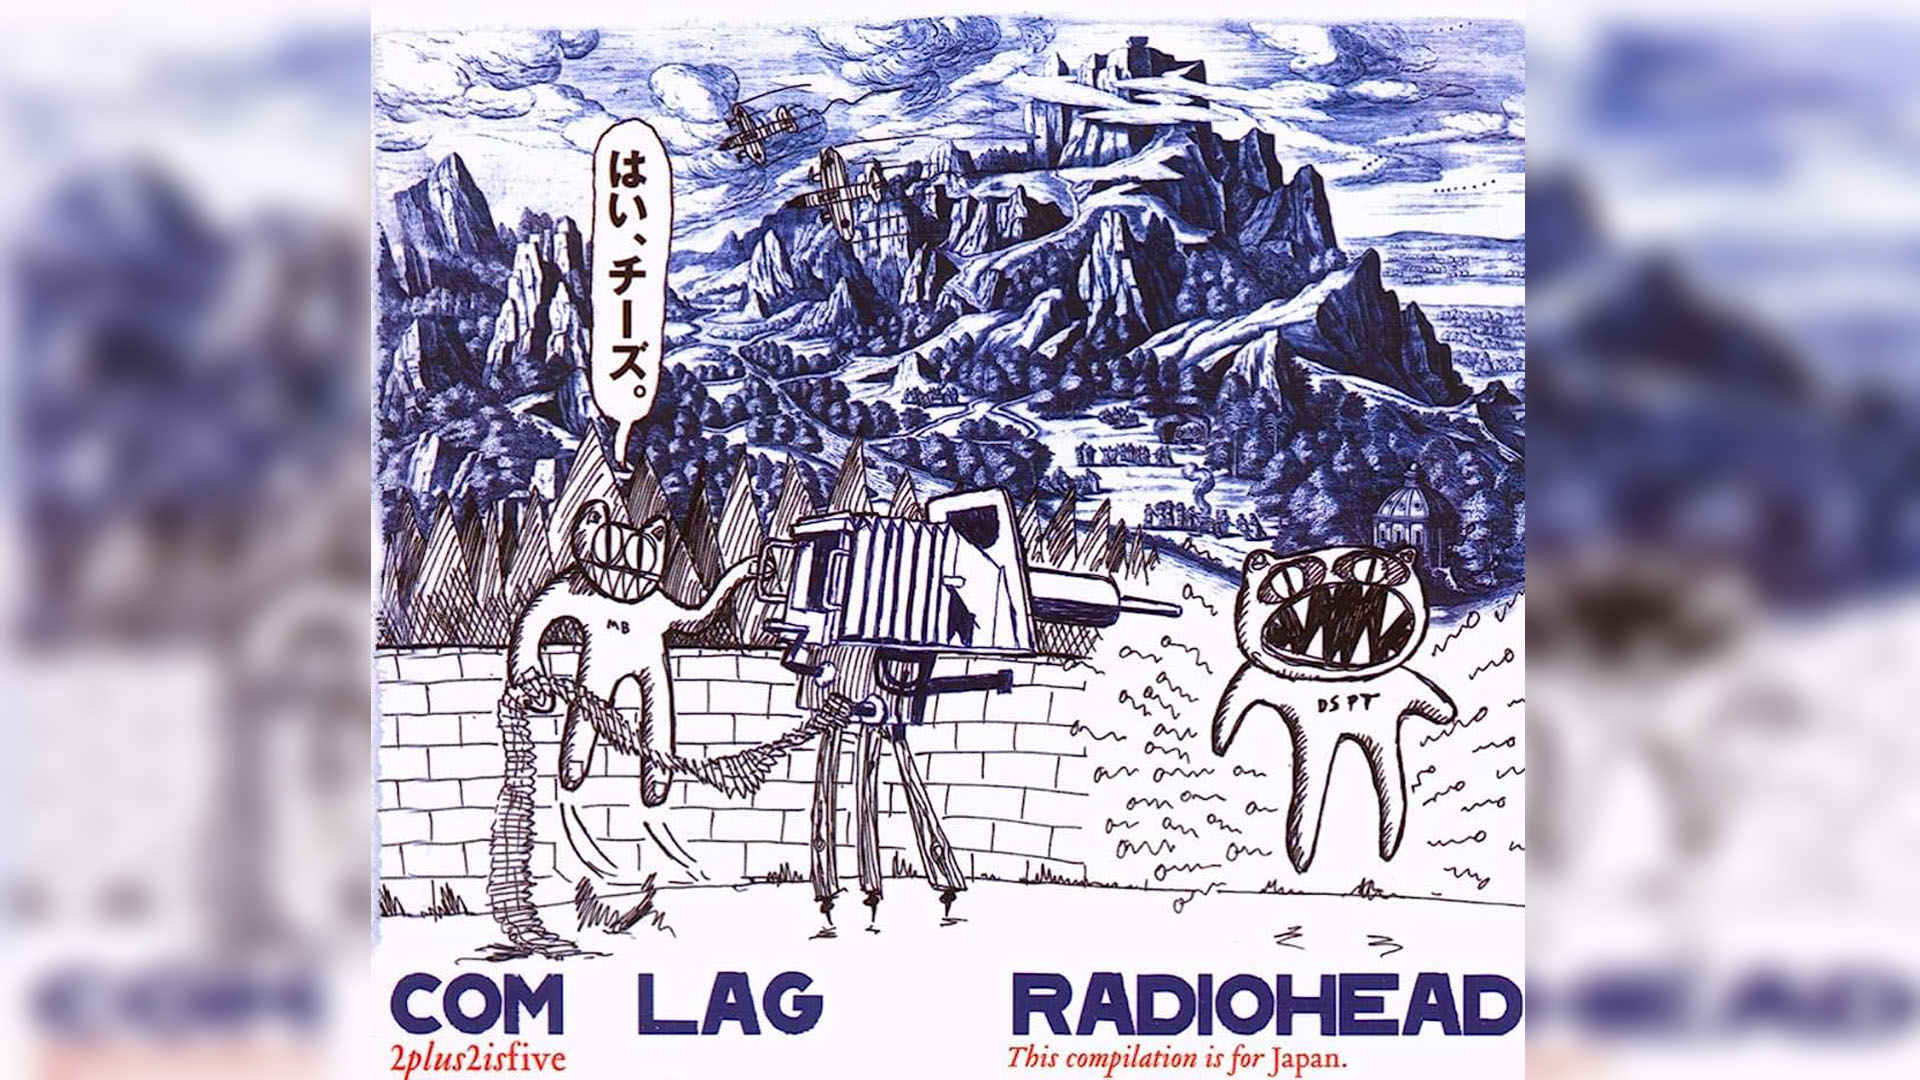 Radiohead-COM LAG (2plus2isfive)